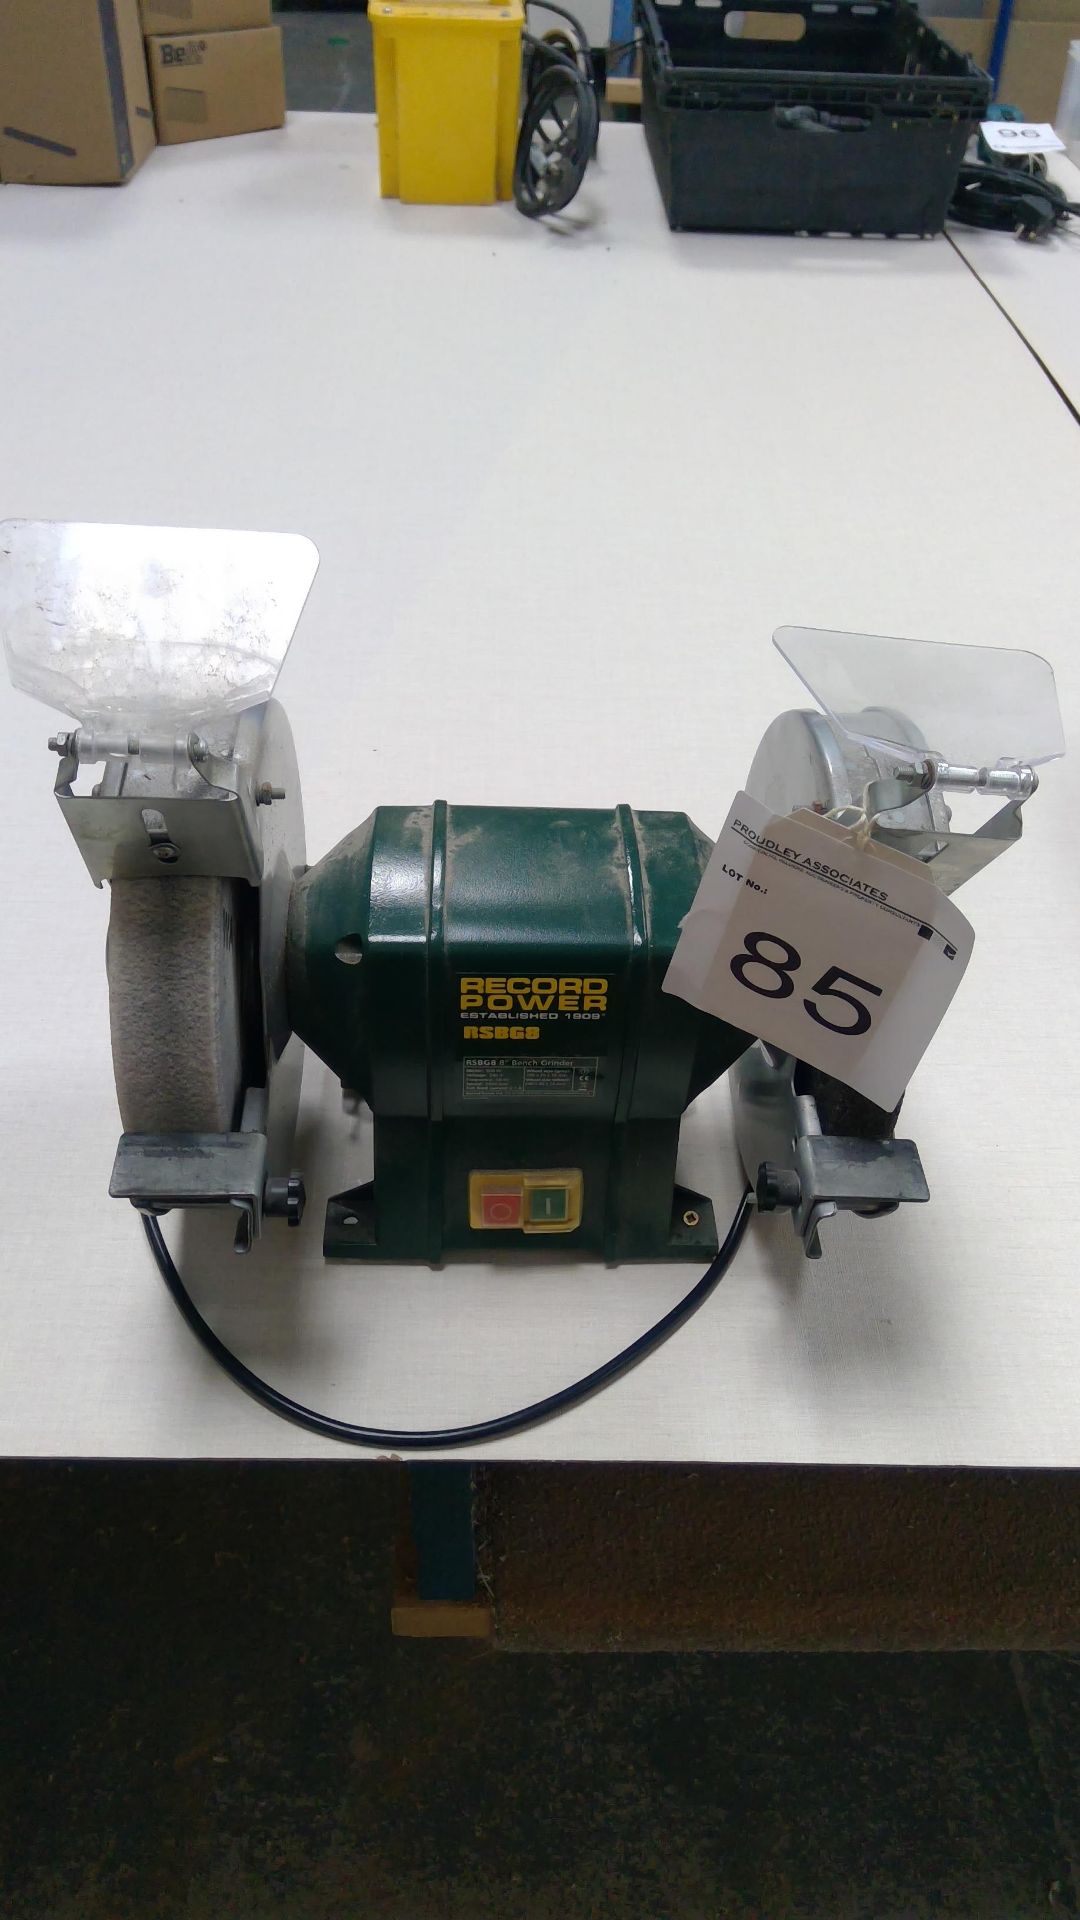 Record Power RSBG8 240v bench mounted 8" dual wheel grinder